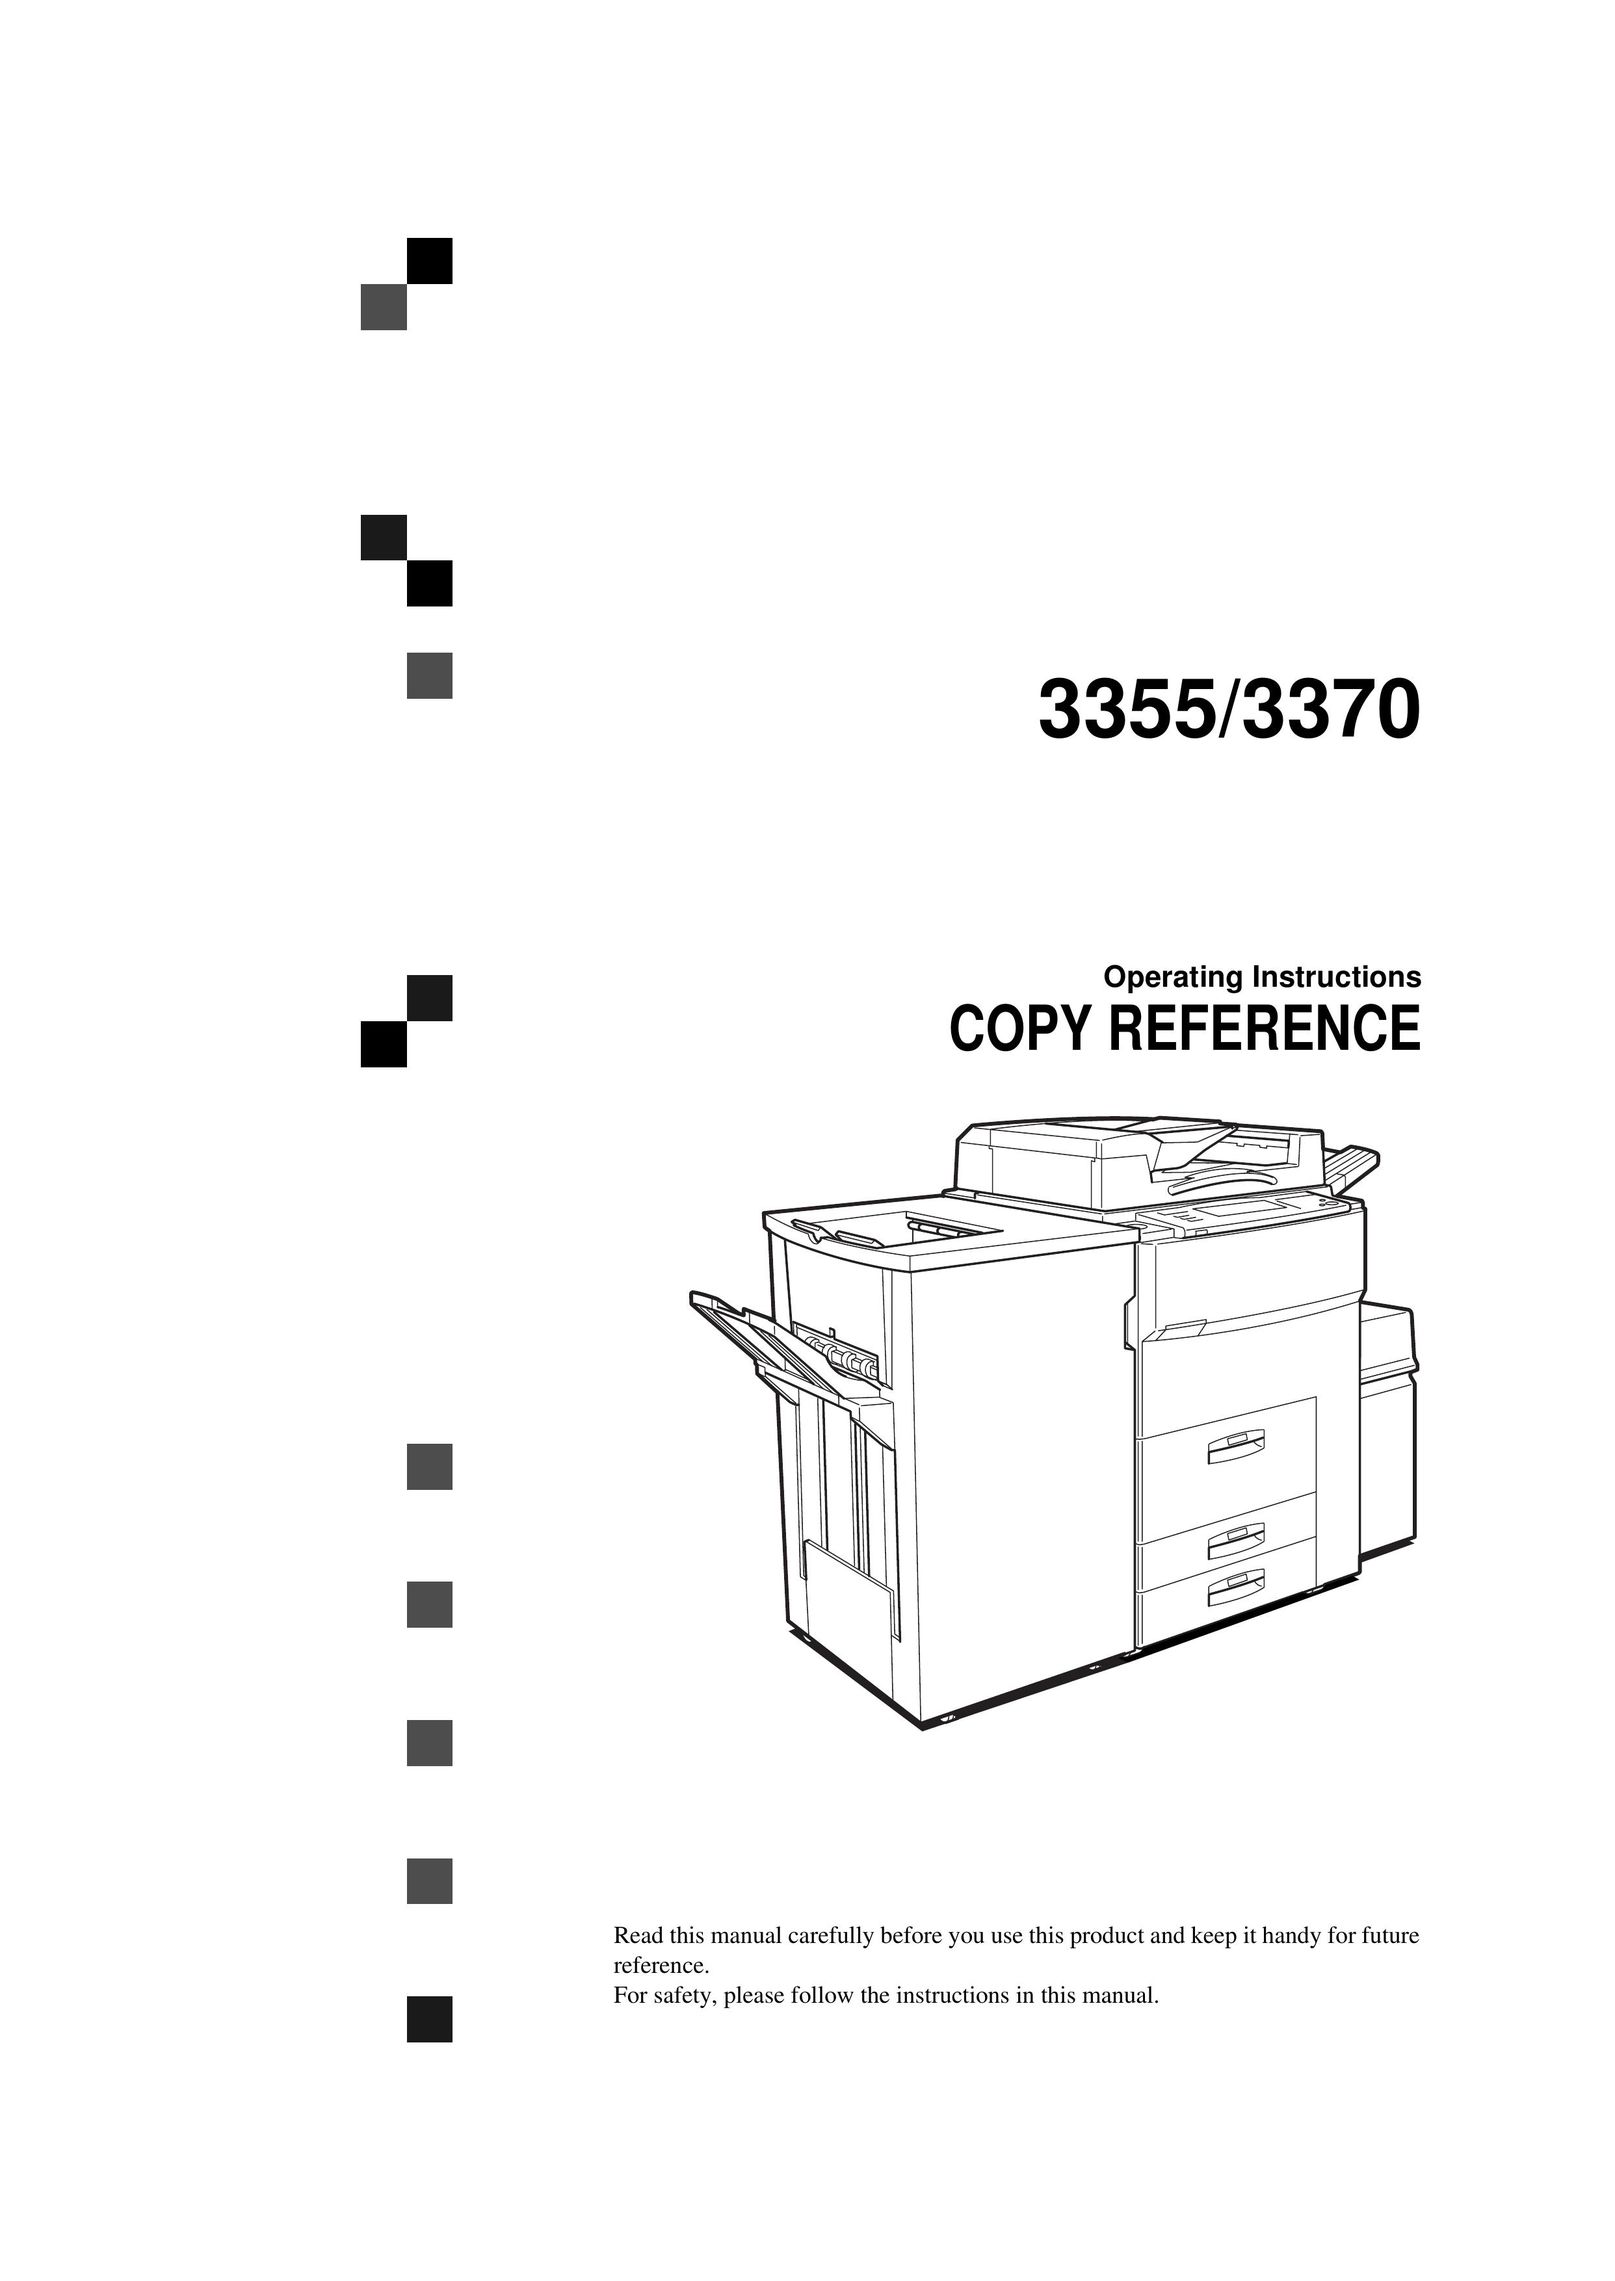 Savin 3355 All in One Printer User Manual